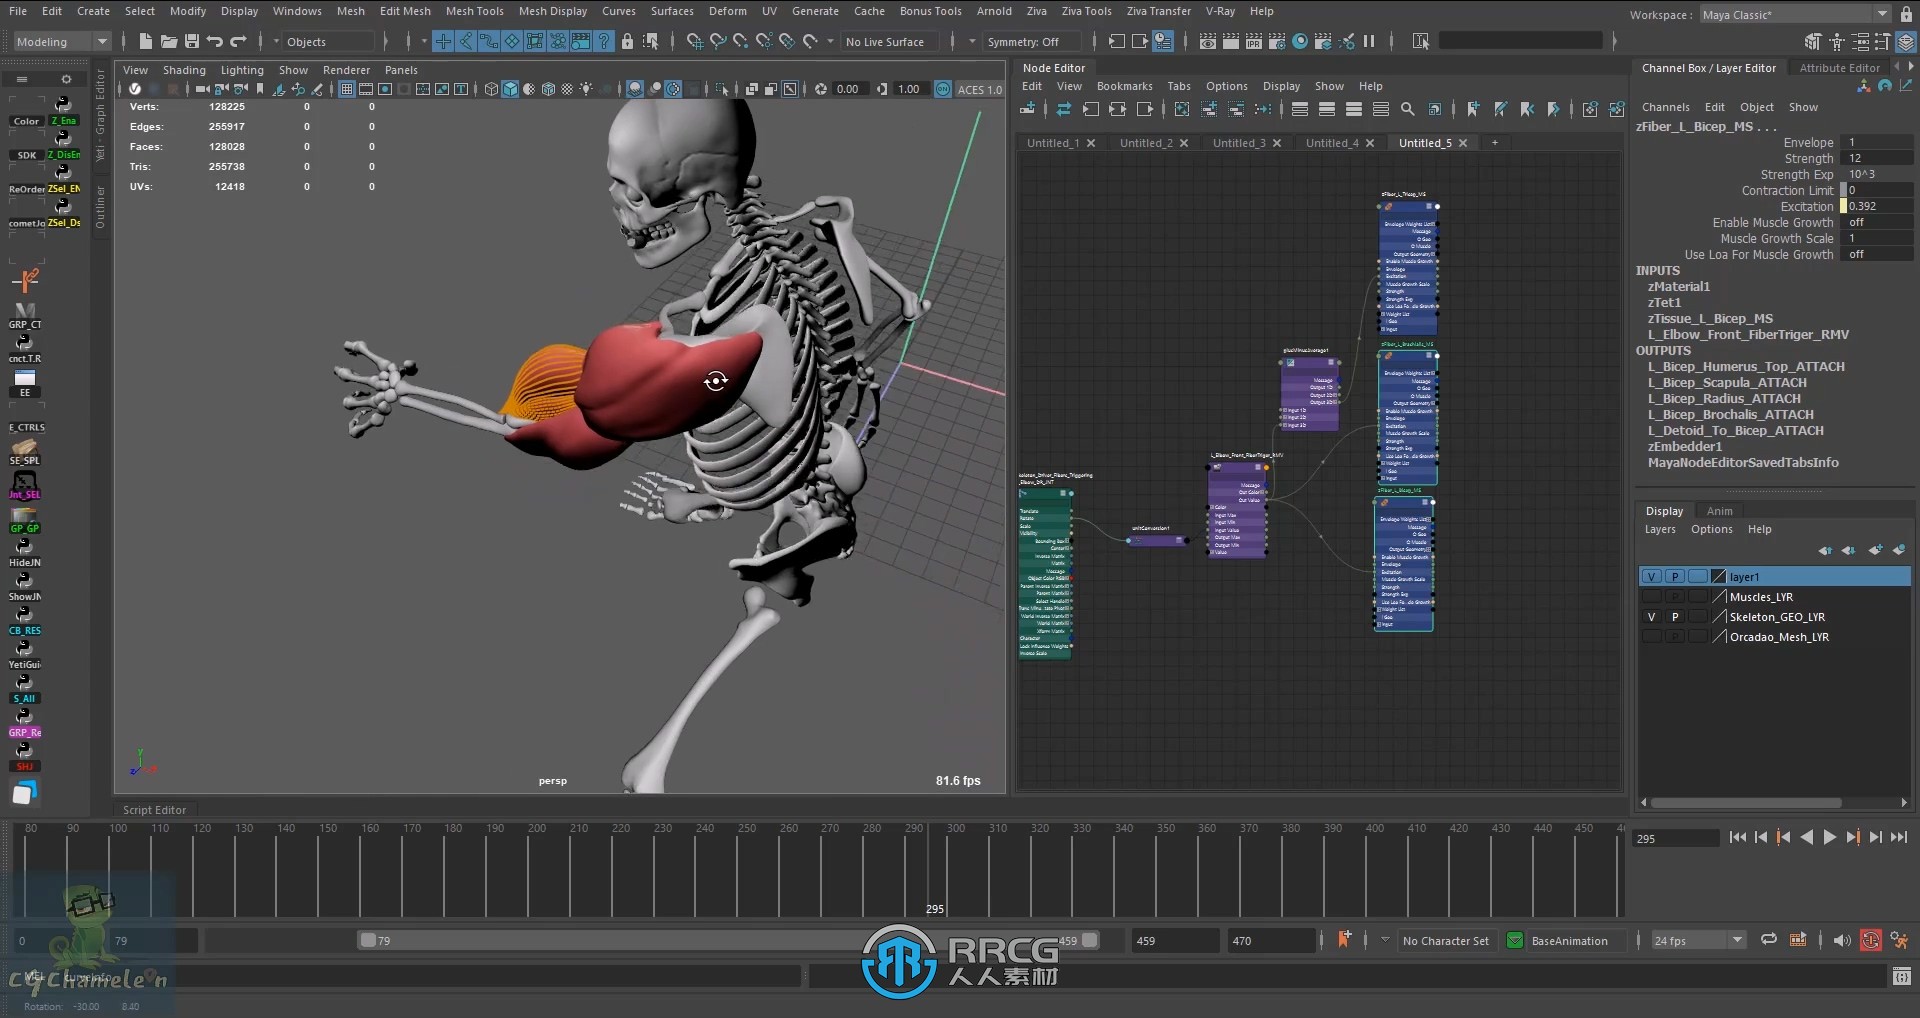 ZIVA Dynamics角色绑定动画大师级训练视频教程